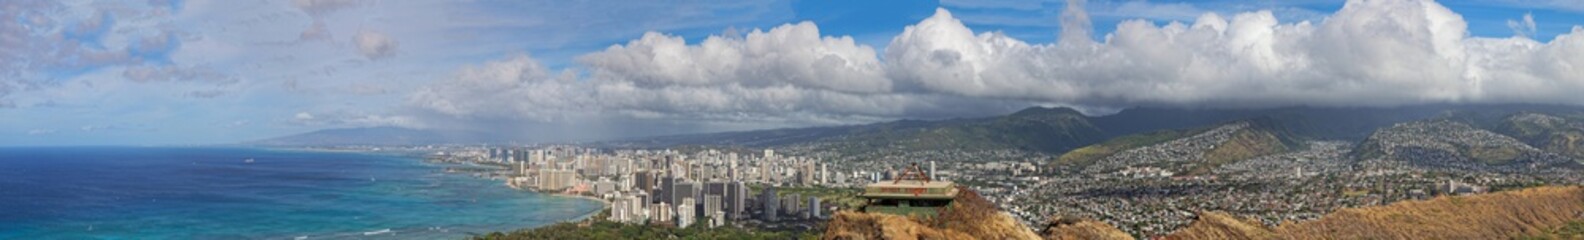 Panoramamic view of downtown Honolulu and Waikiki, Oahu, Hawaii